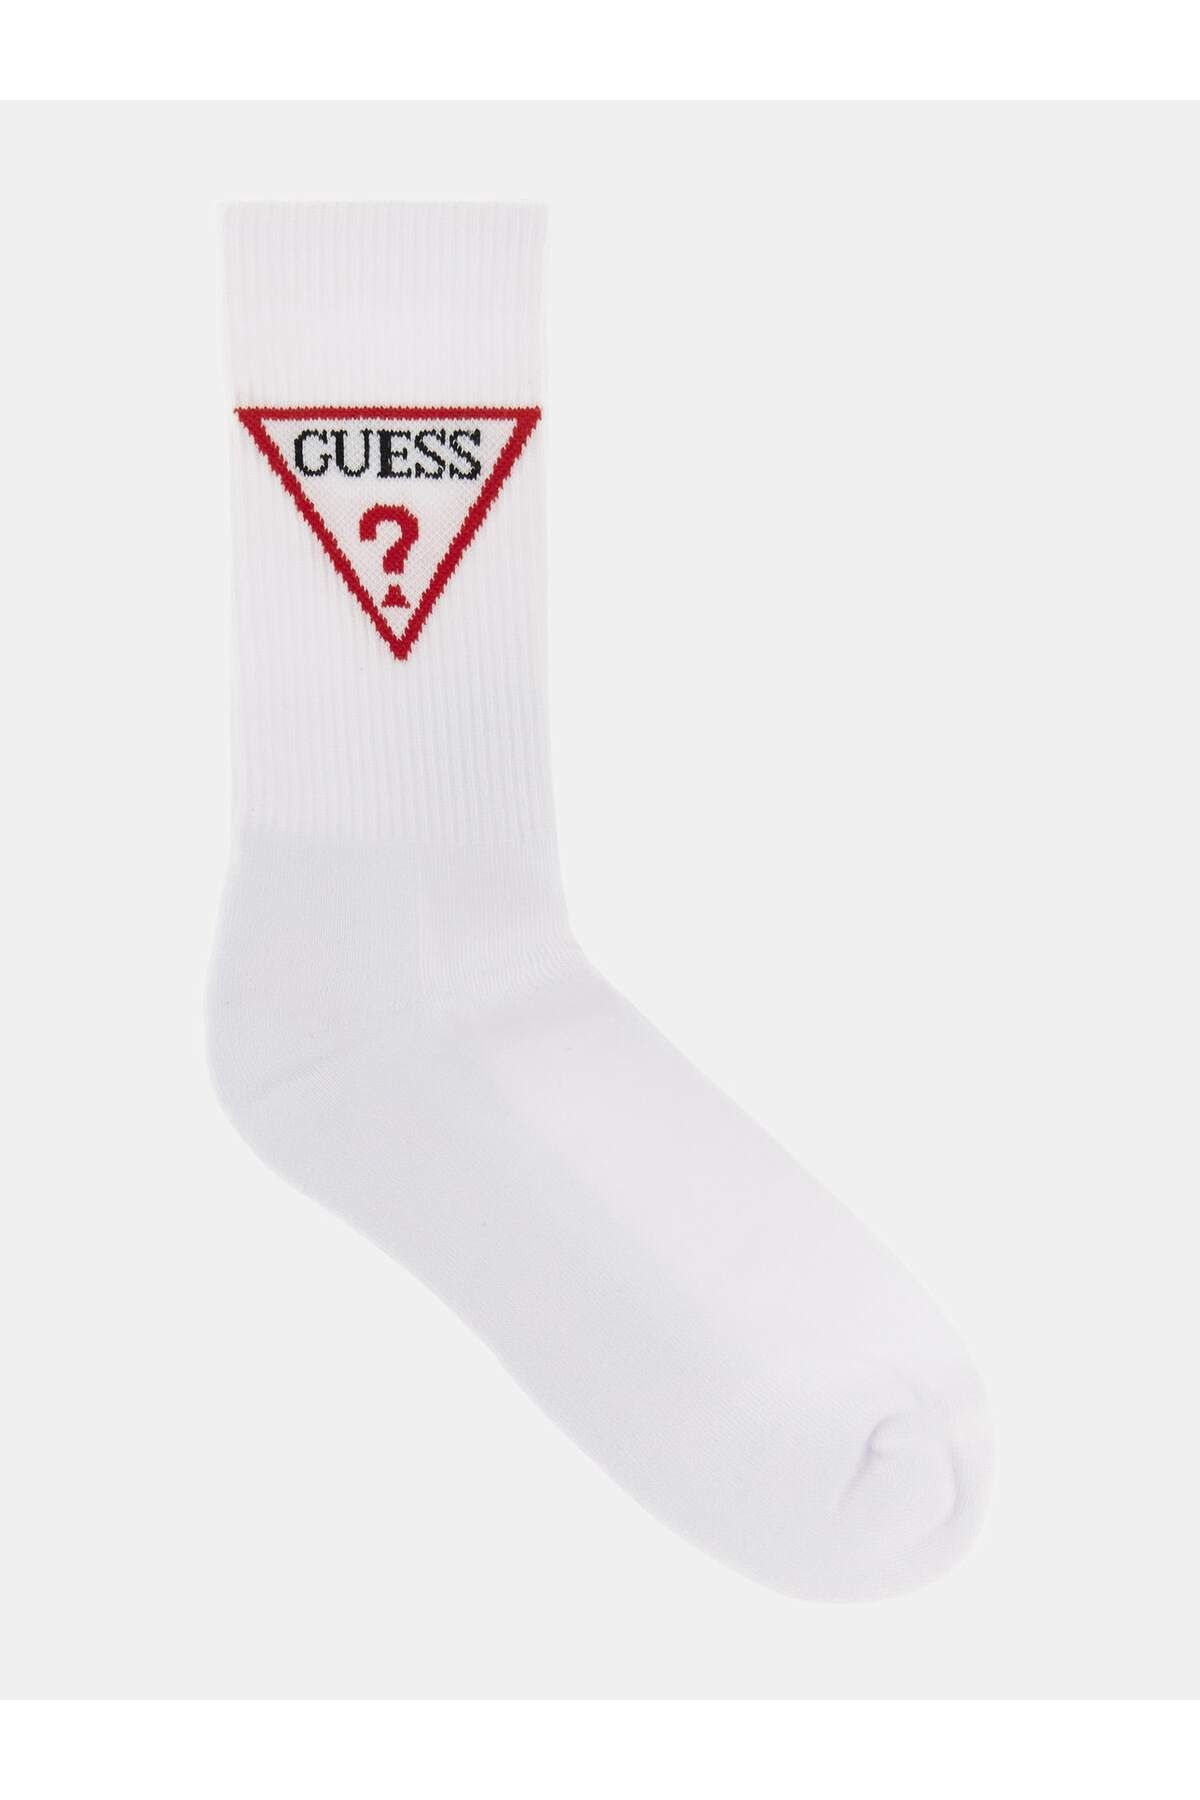 Guess Sport Erkek Çorap